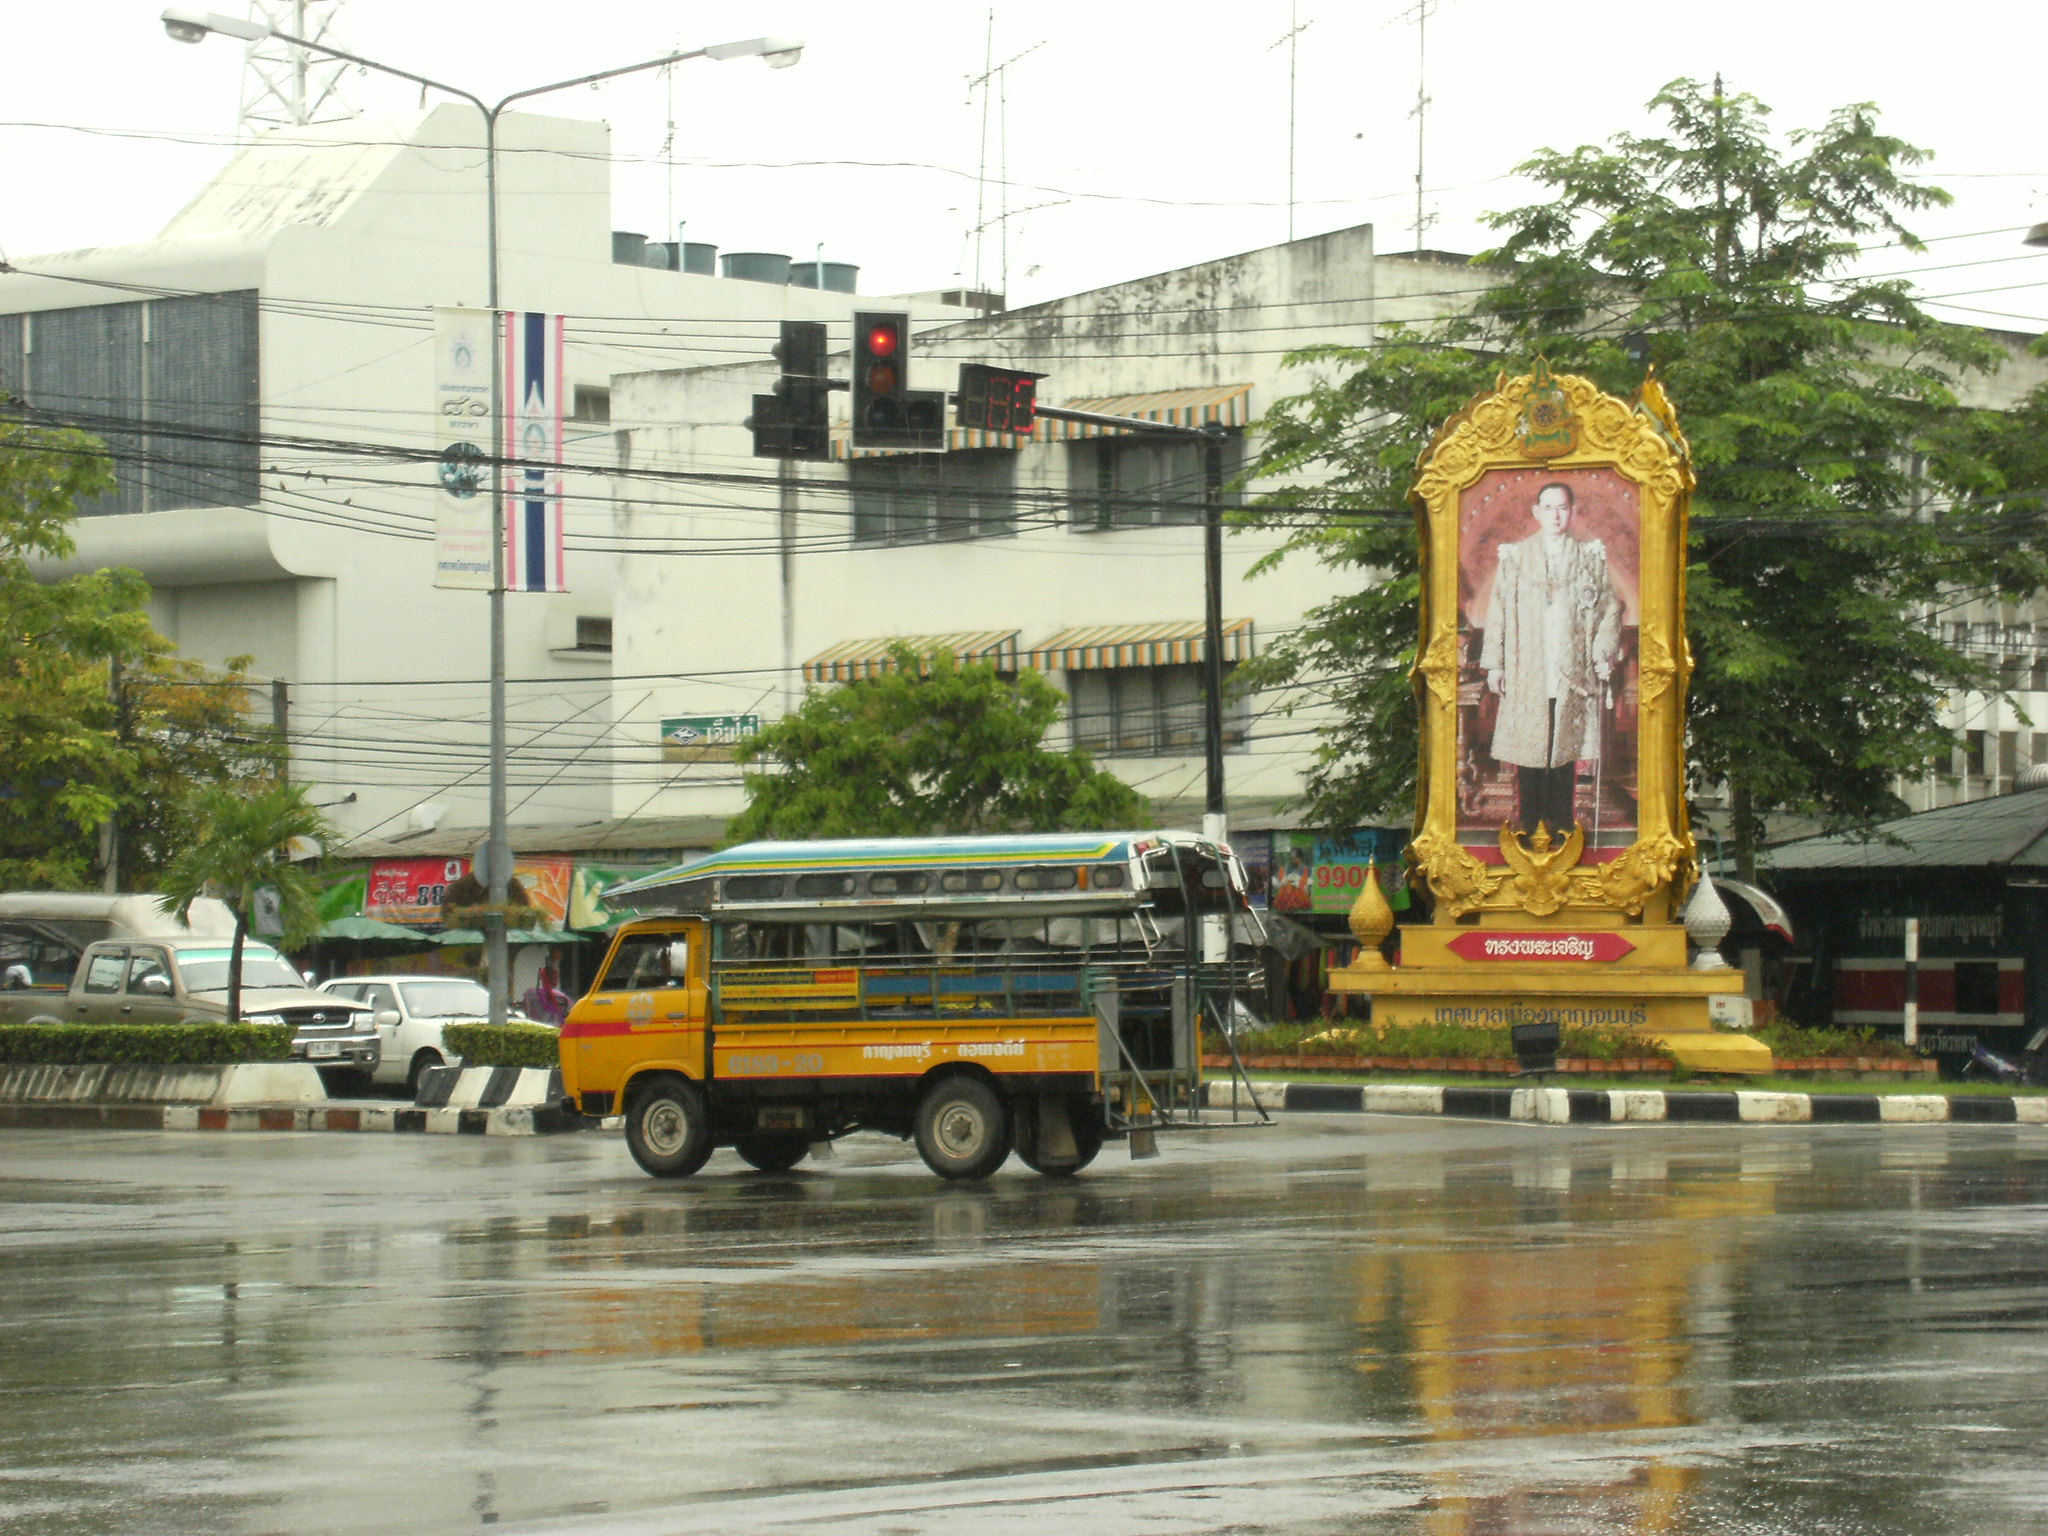 Portrait of King Bhumibol Adulyadej and a songthaew (baht bus) in Kanchanaburi